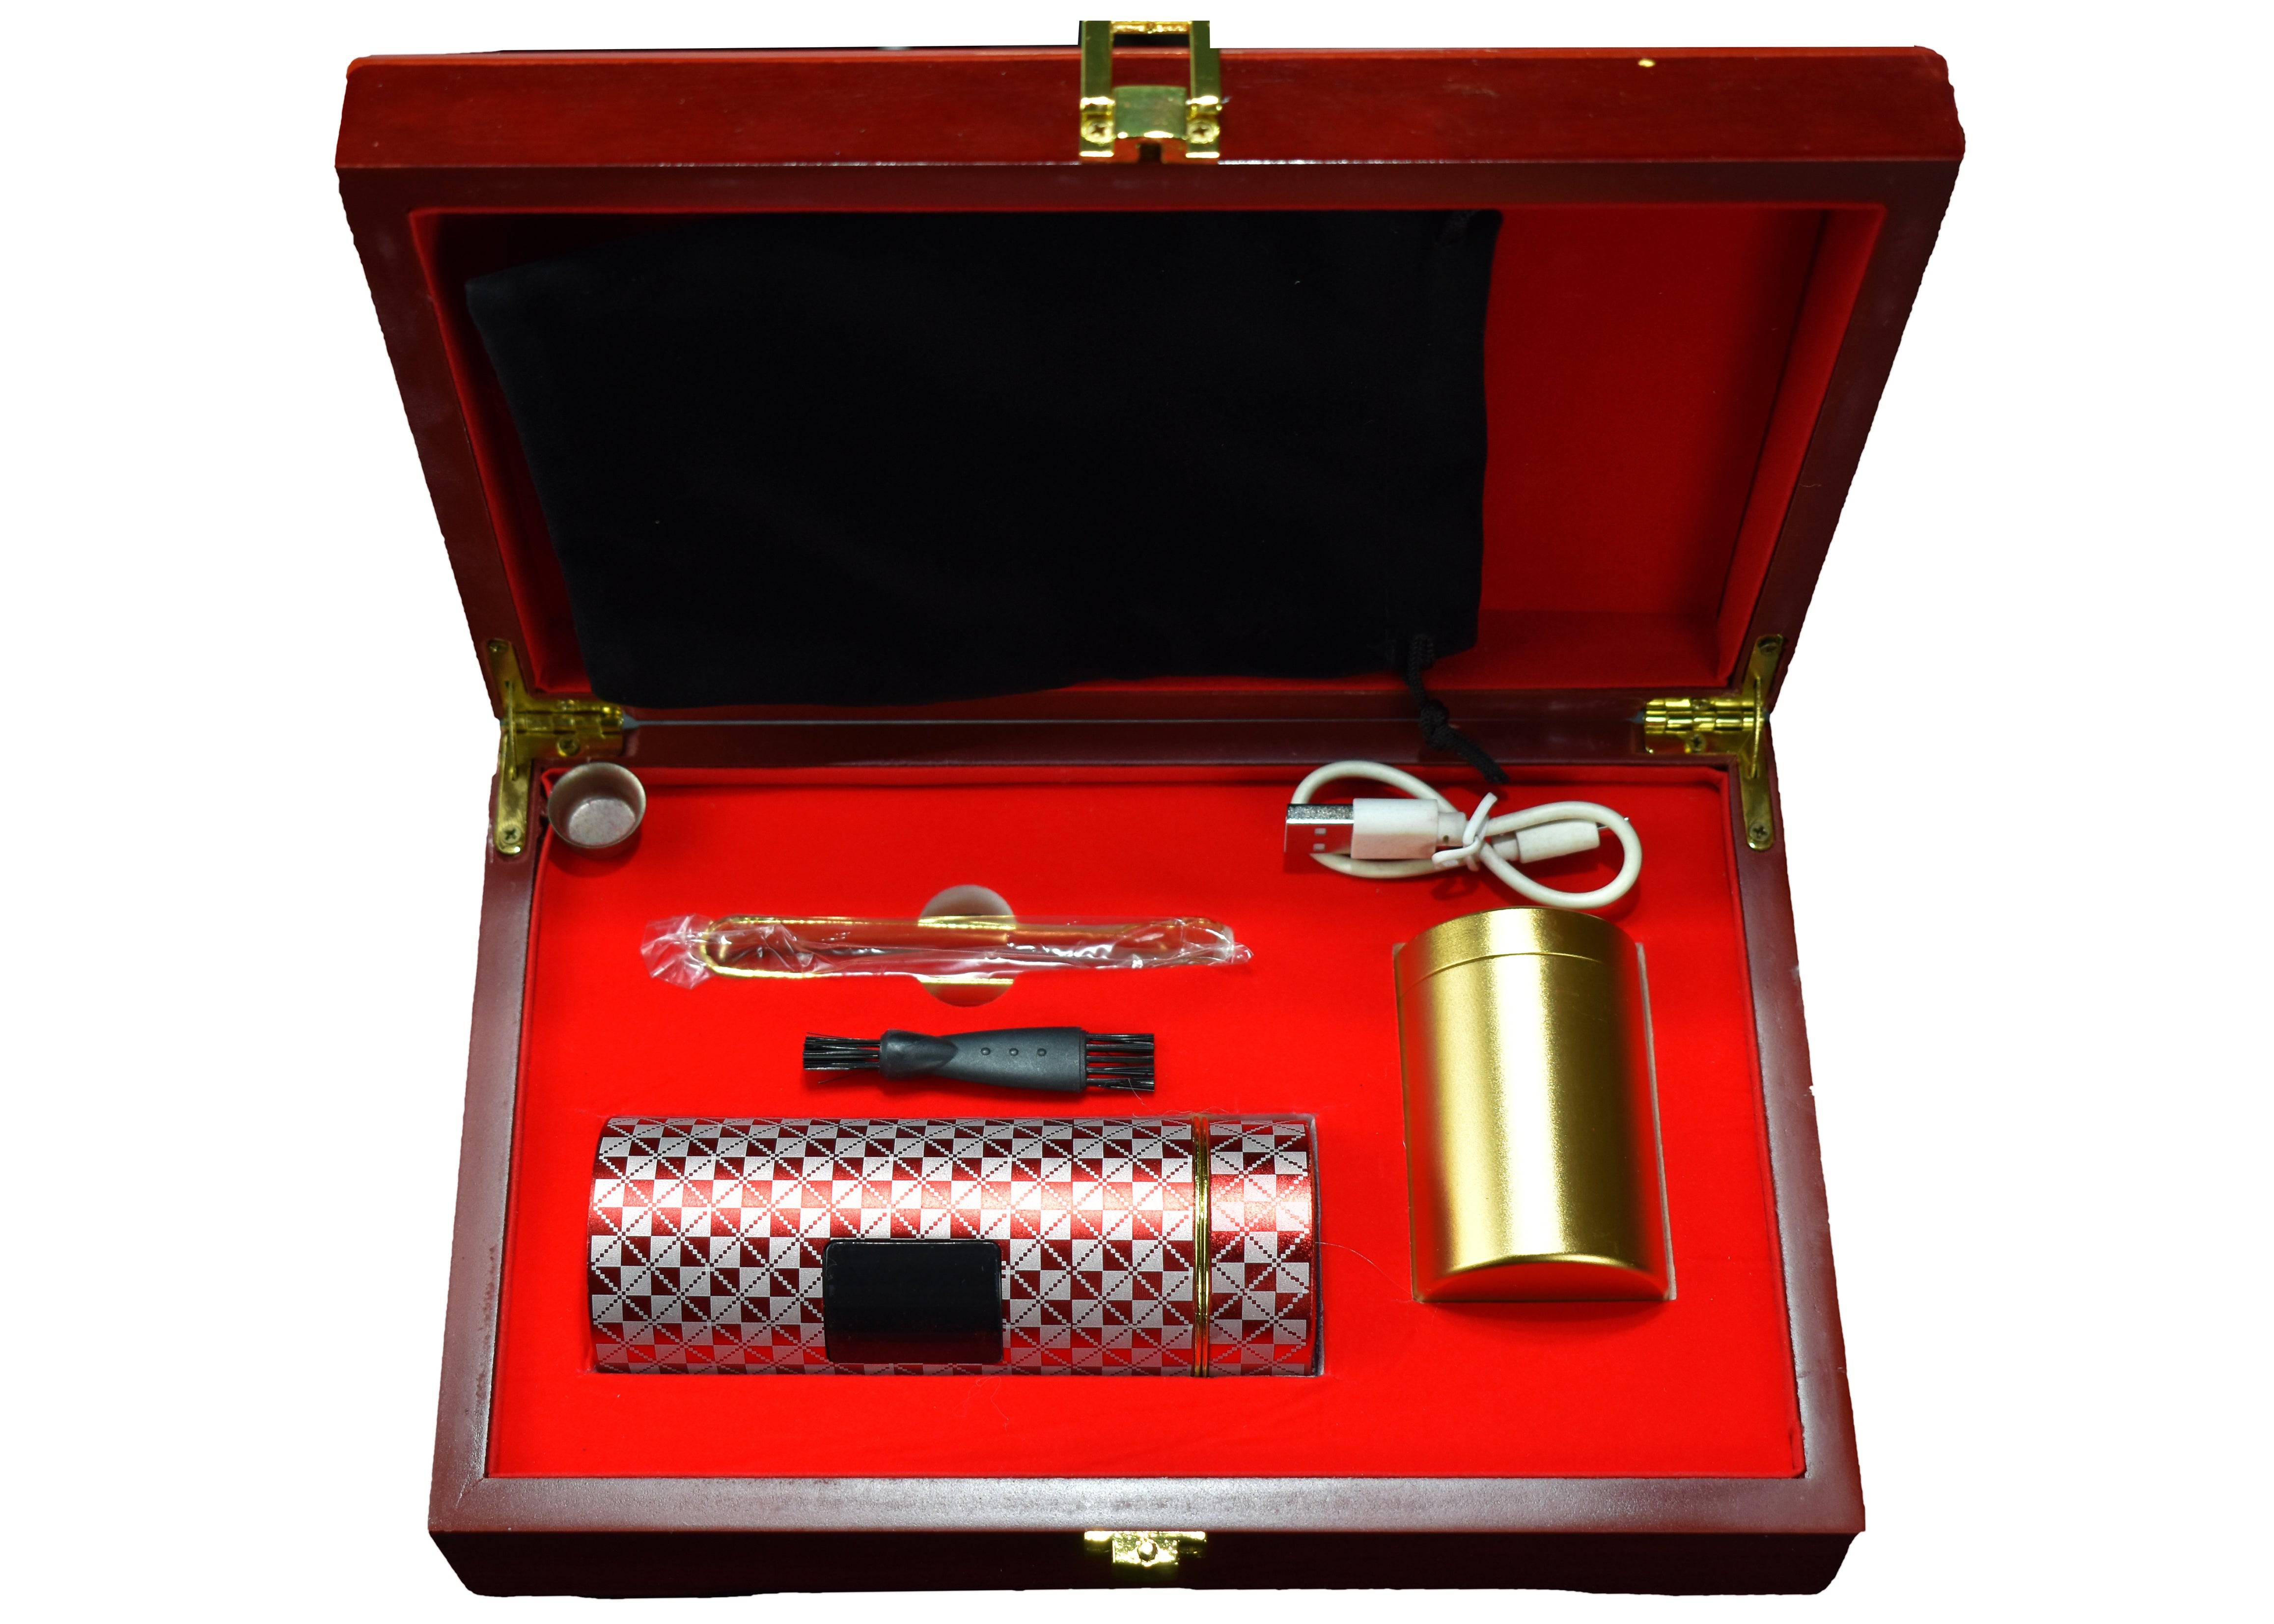 Portable USB Incense Burner Kit- Red - Intense oud